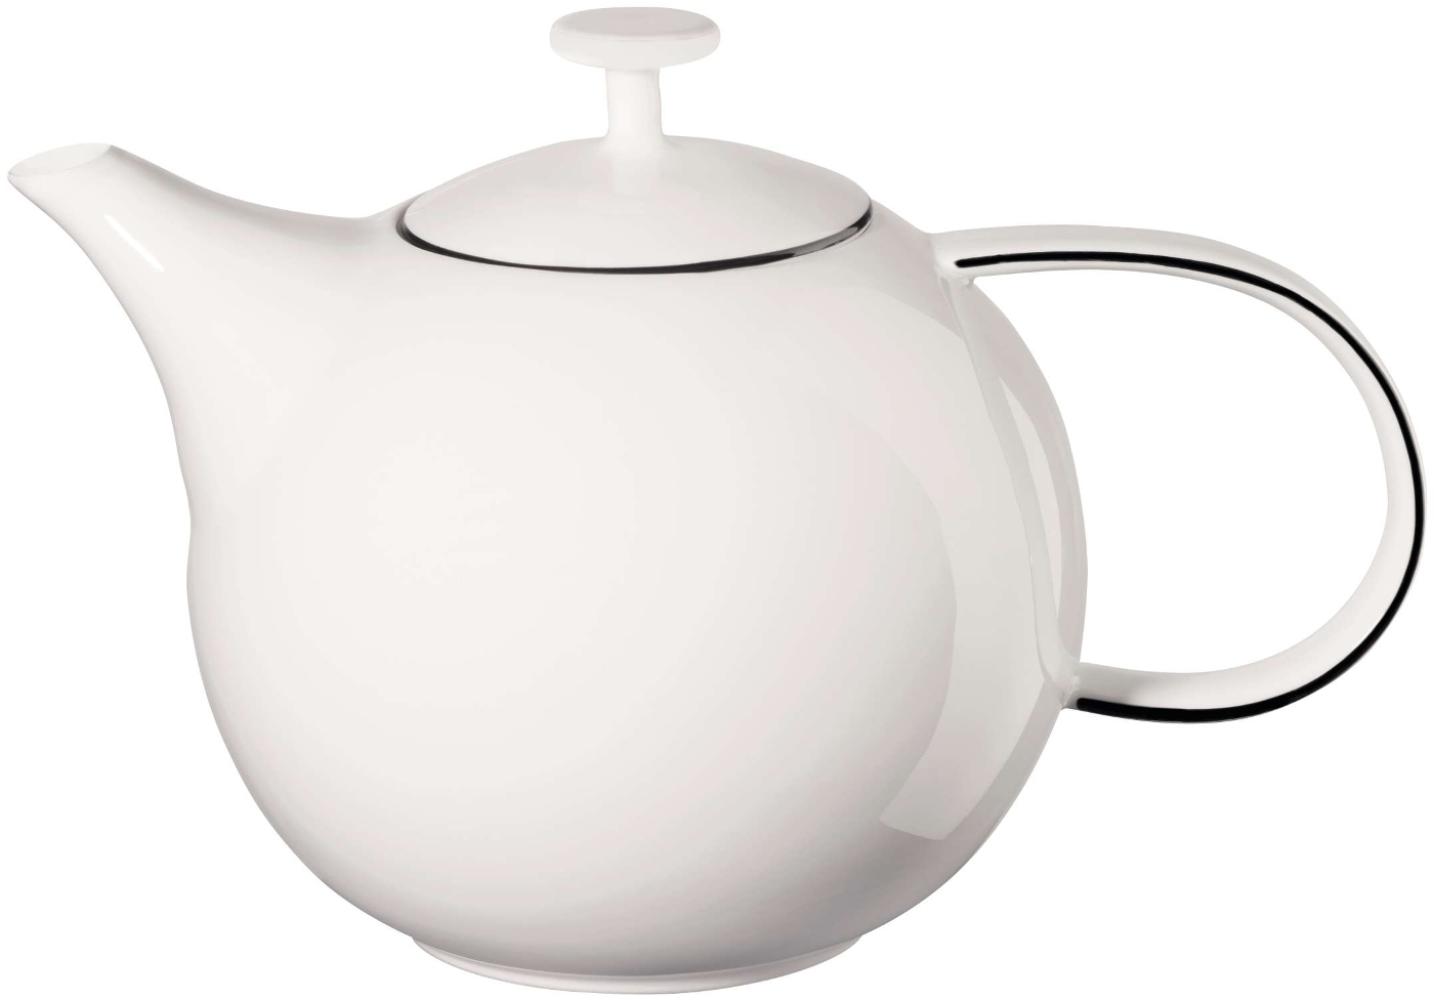 Teekanne mit Edelstahlsieb ligne noire 1,5l ASA Selection Teekanne - MikrowelleBackofen geeignet, Spülmaschinengeeignet Bild 1